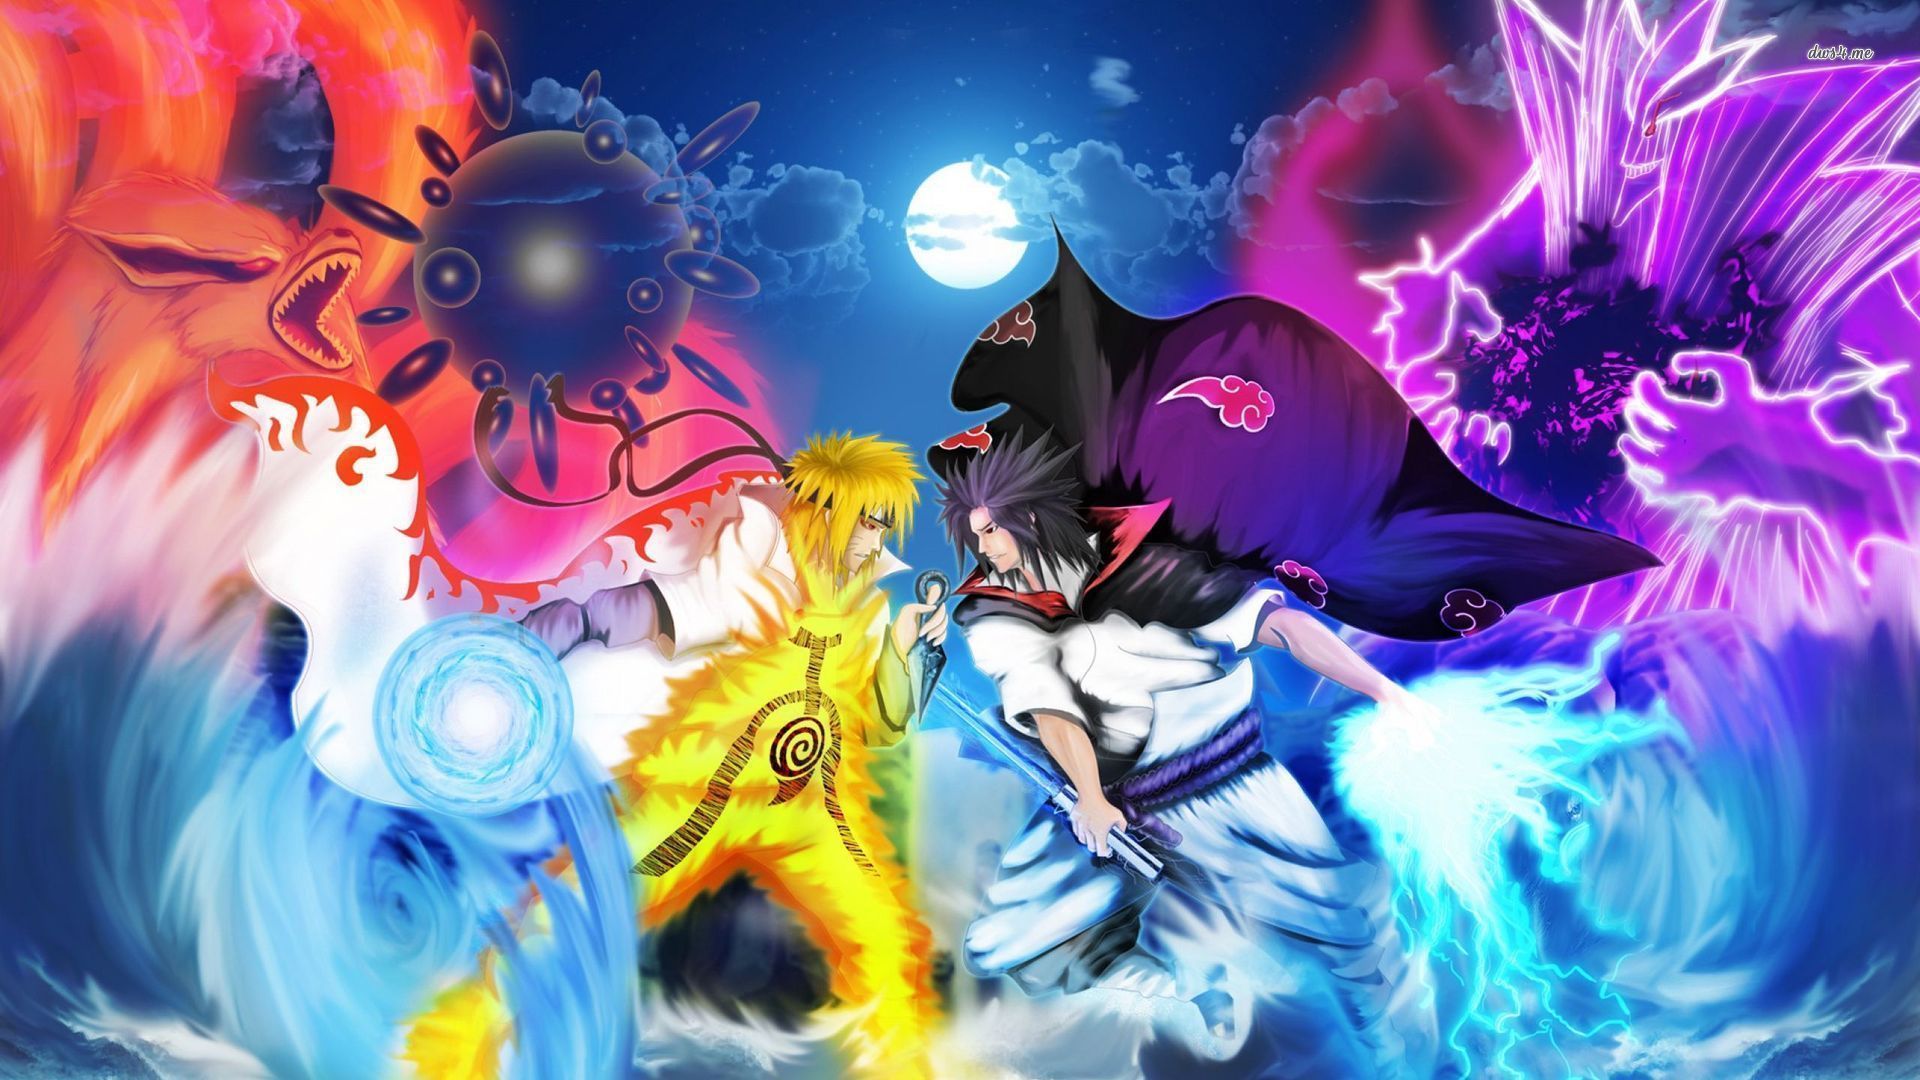 Naruto Vs Sasuke Backgrounds